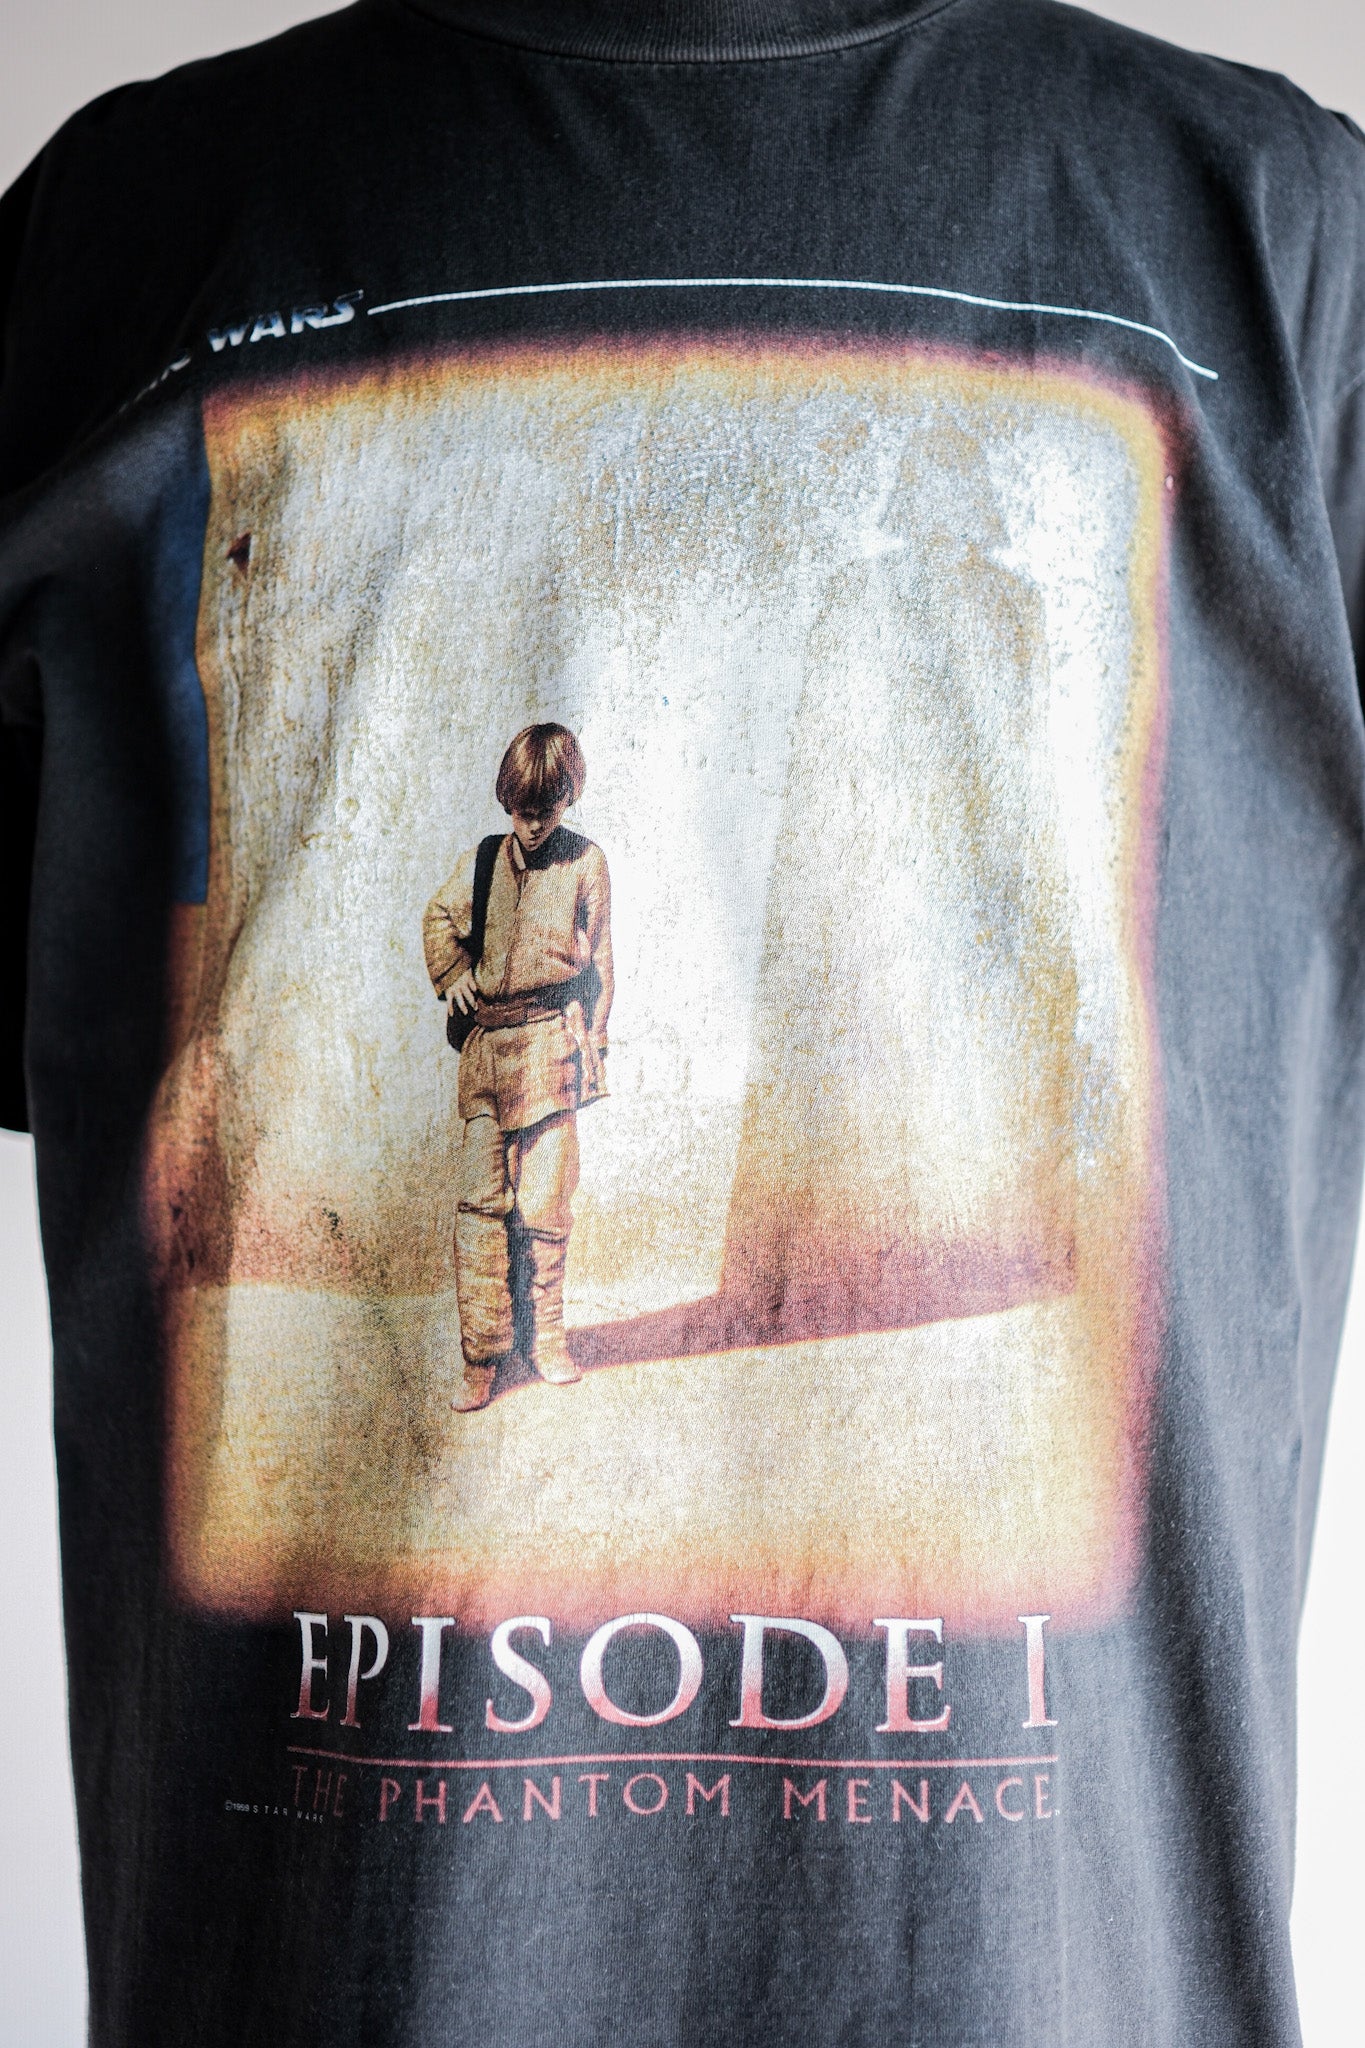 【~90's】Vintage Bootleg Movie Print T-shirt "Star Wars Episode I"